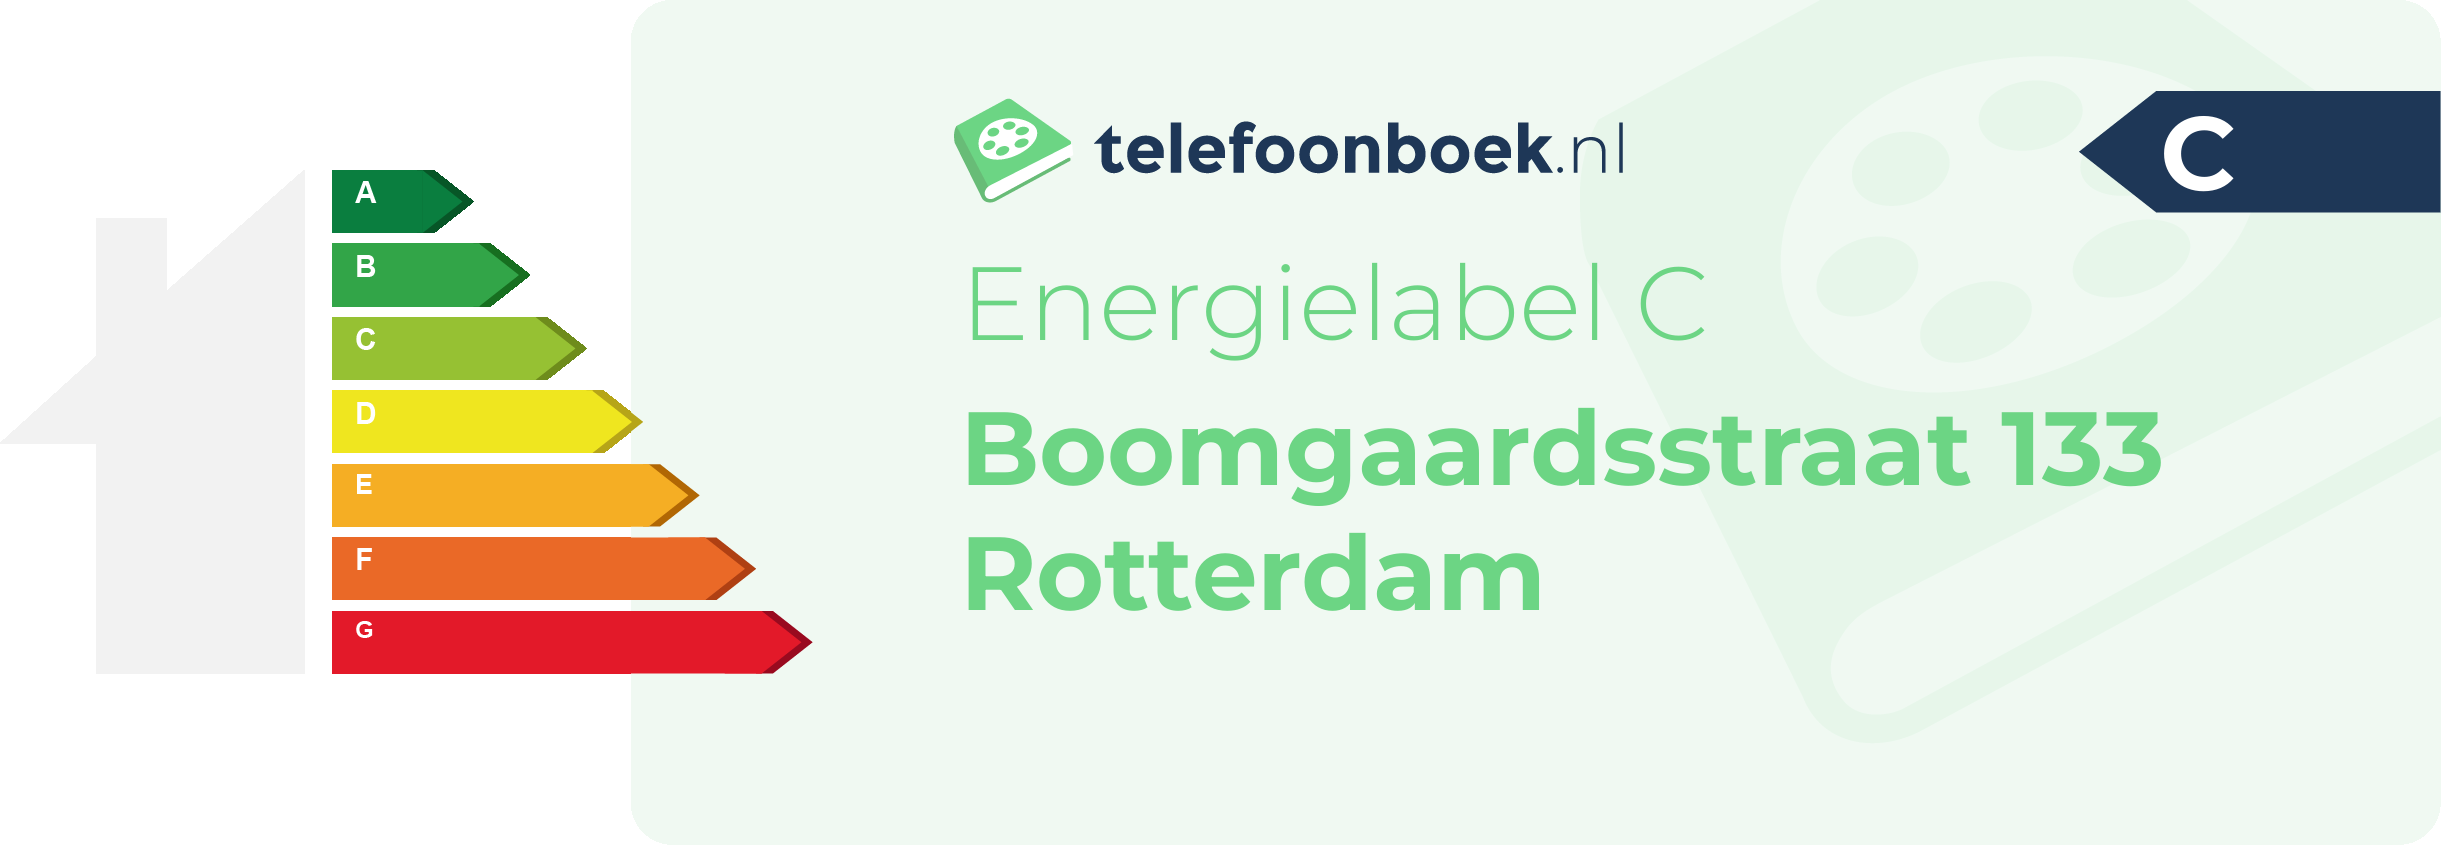 Energielabel Boomgaardsstraat 133 Rotterdam